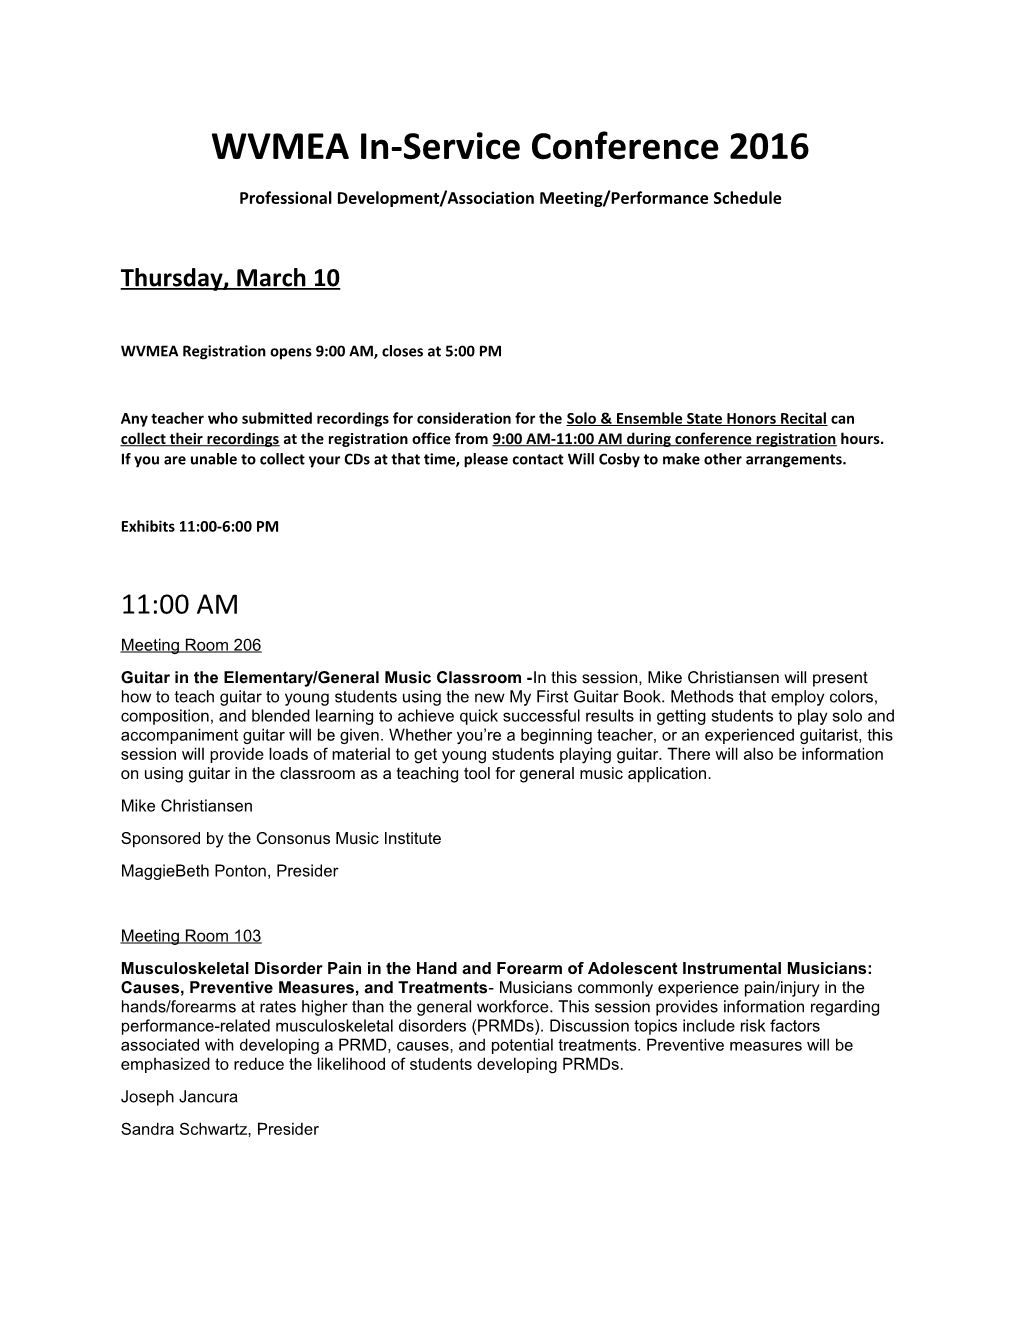 Professional Development/Association Meeting/Performance Schedule